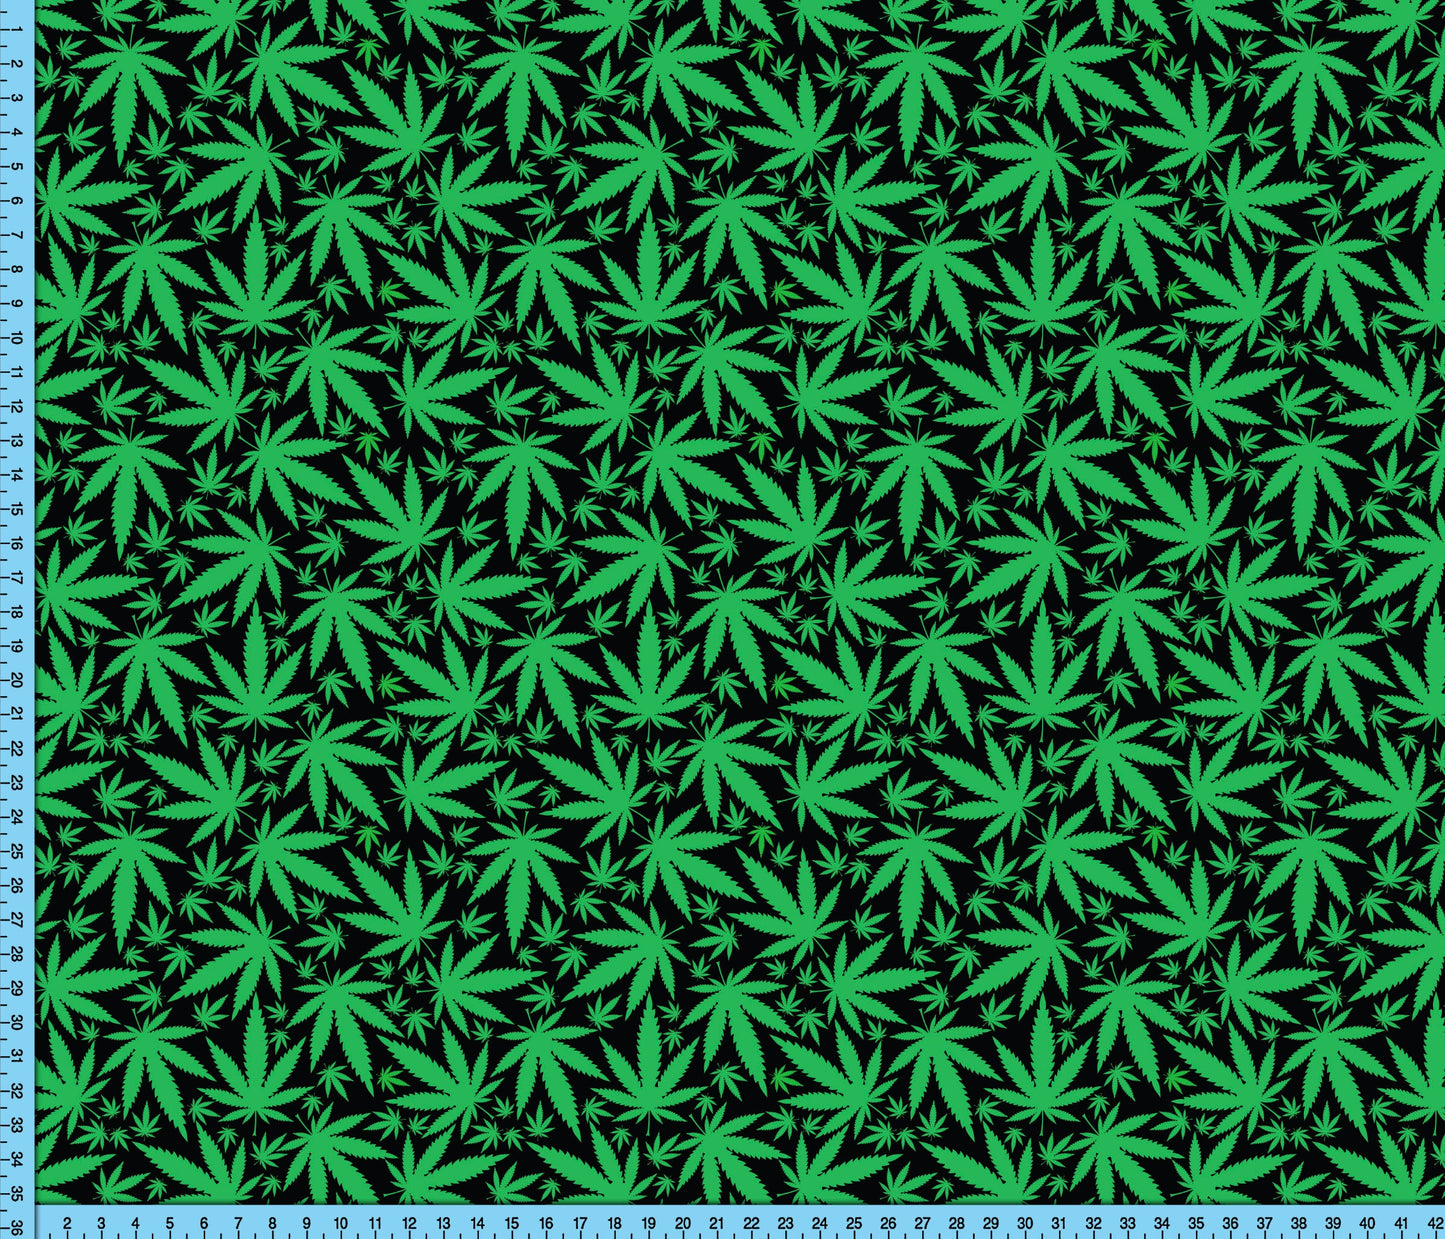 Cannabis Leaf Fabric By The Yard, Marijuana Leaf Fabric Printed By the Yard. Spandex, Broadcloth, Poplin, Gabardine, Liverpool, Satin